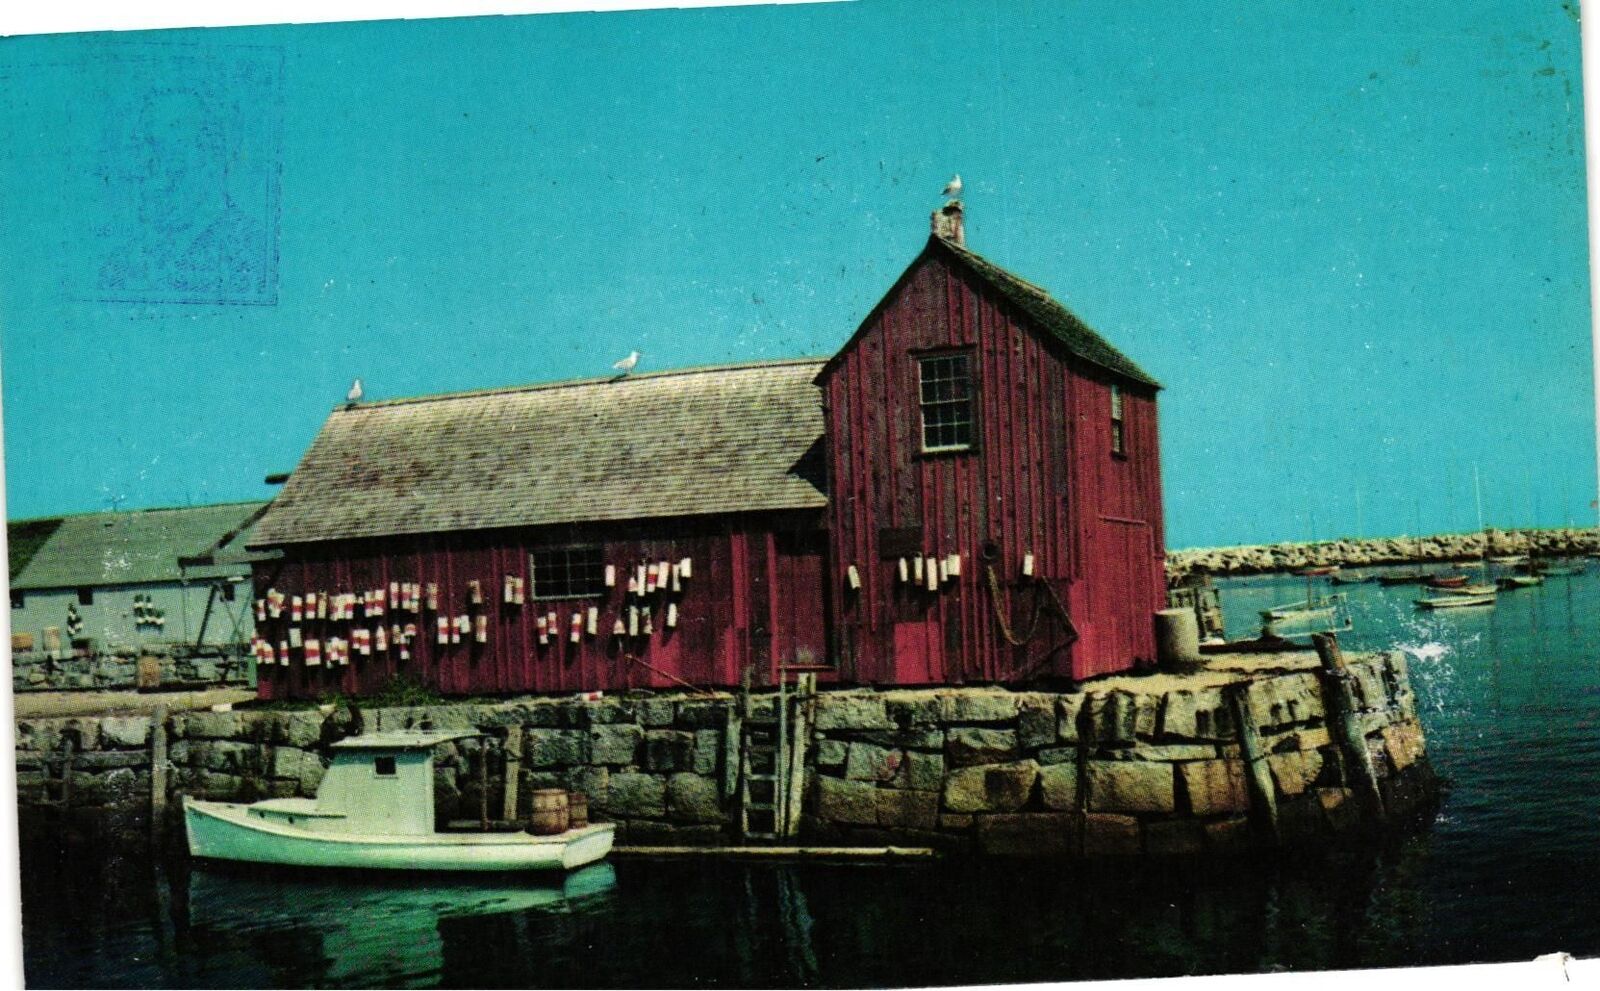 Vintage Postcard- Building and boat on a dock, Rockport, MA 1960s